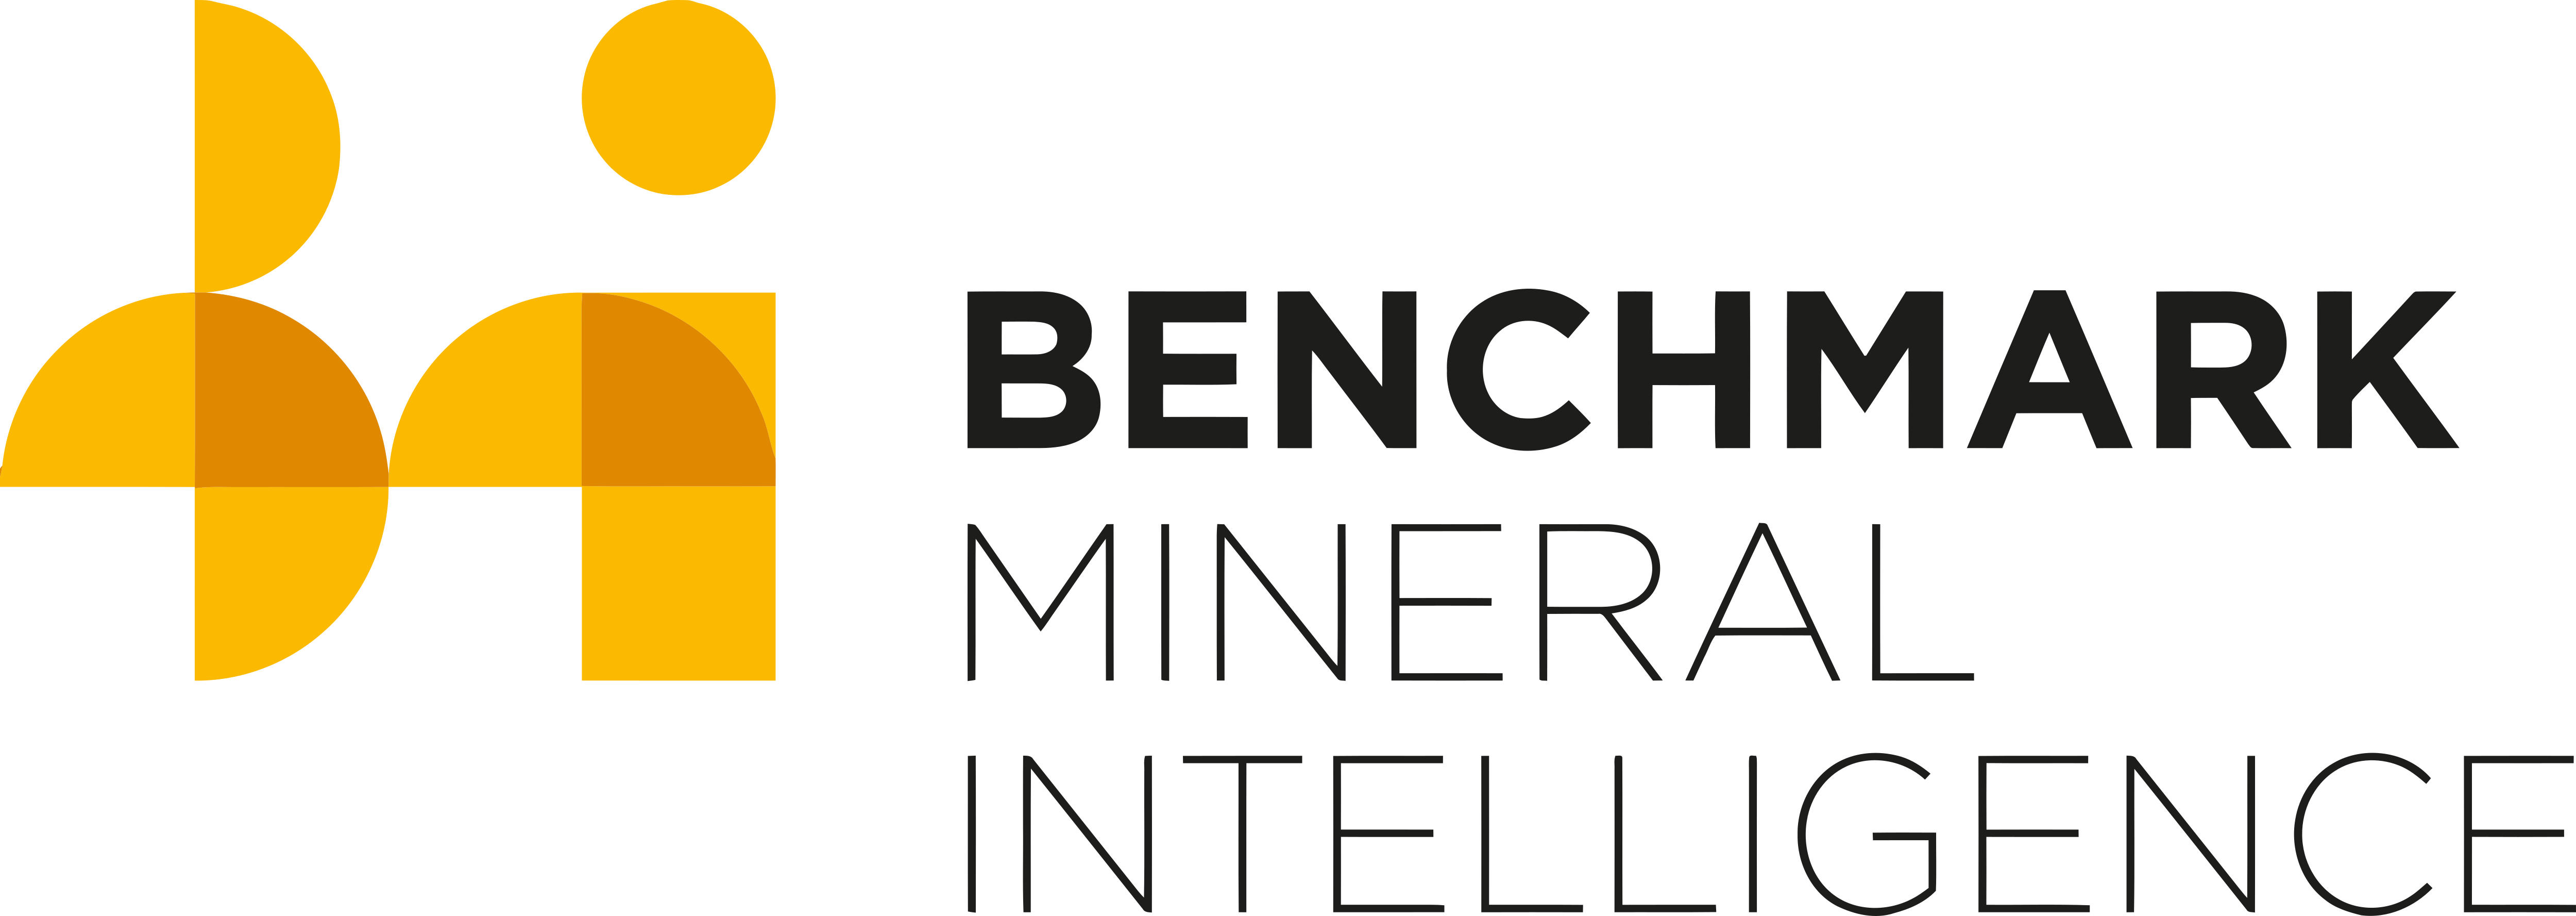 Benchmark Minerals Logos Download